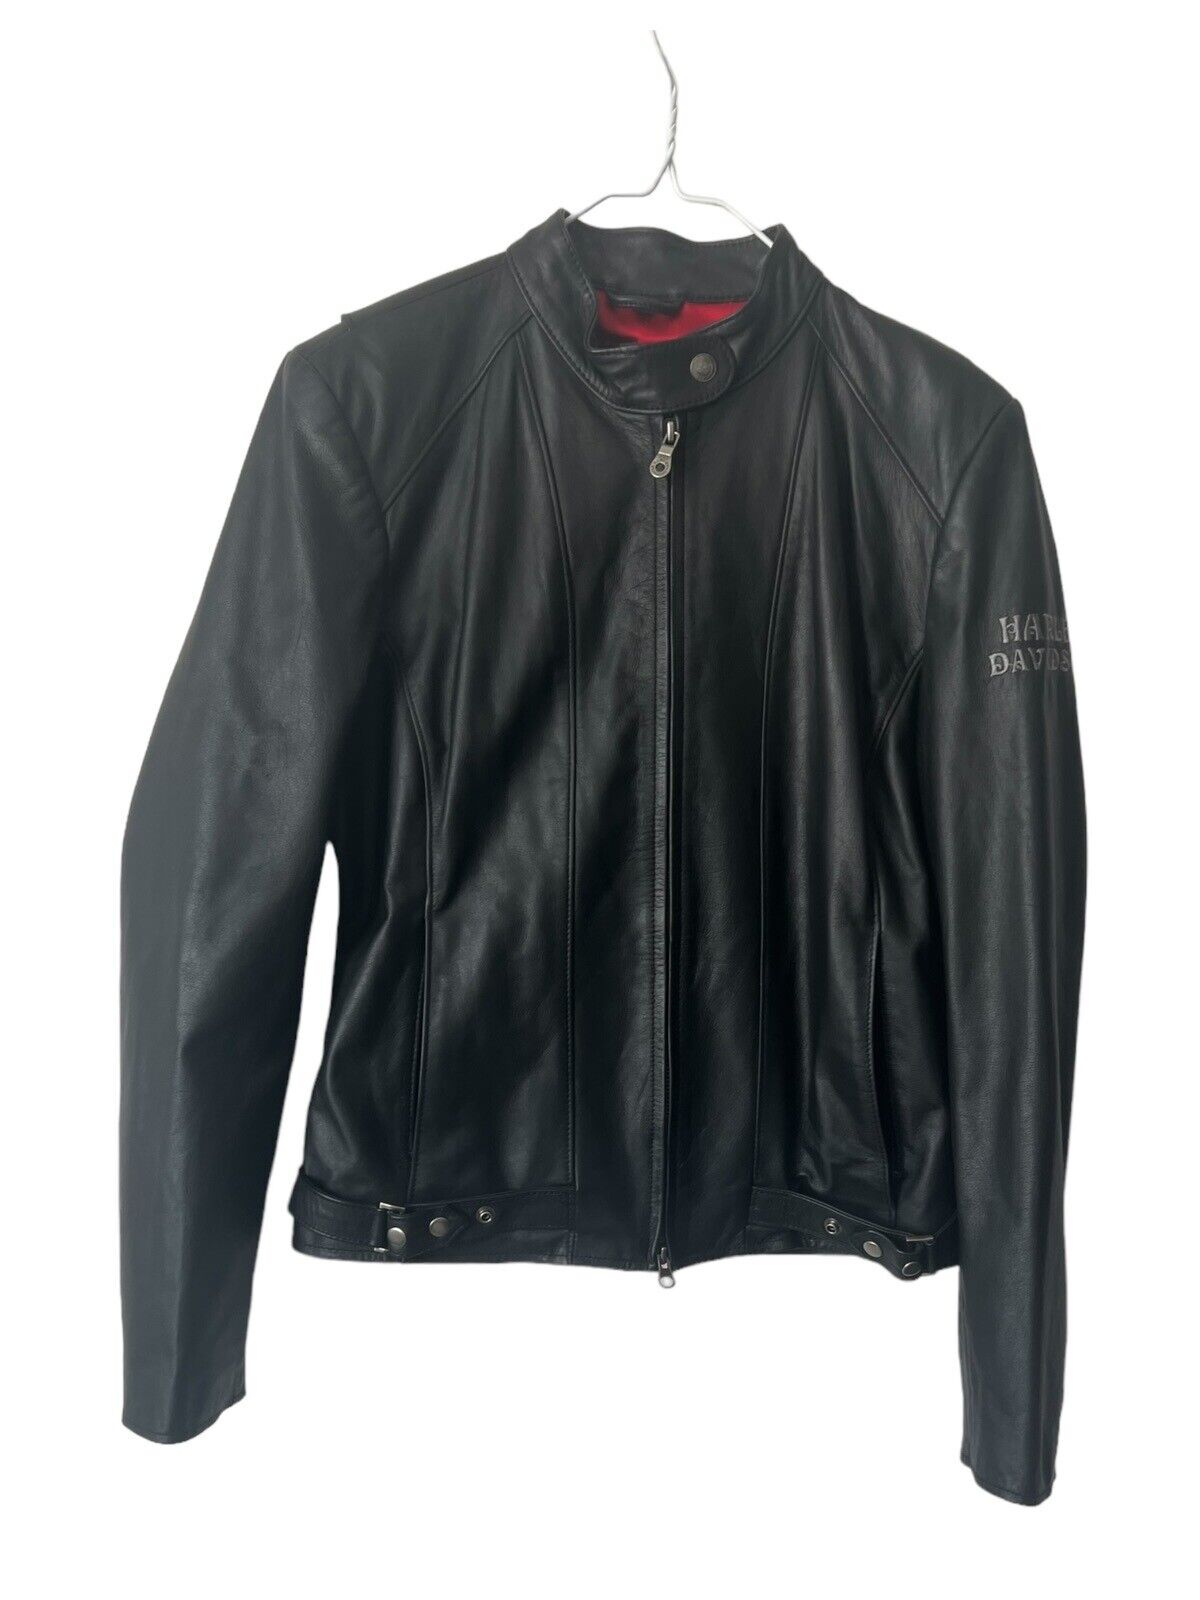 Harley Davidson Womens Leather Jacket RN 103819 Year 2015 Sz Medium